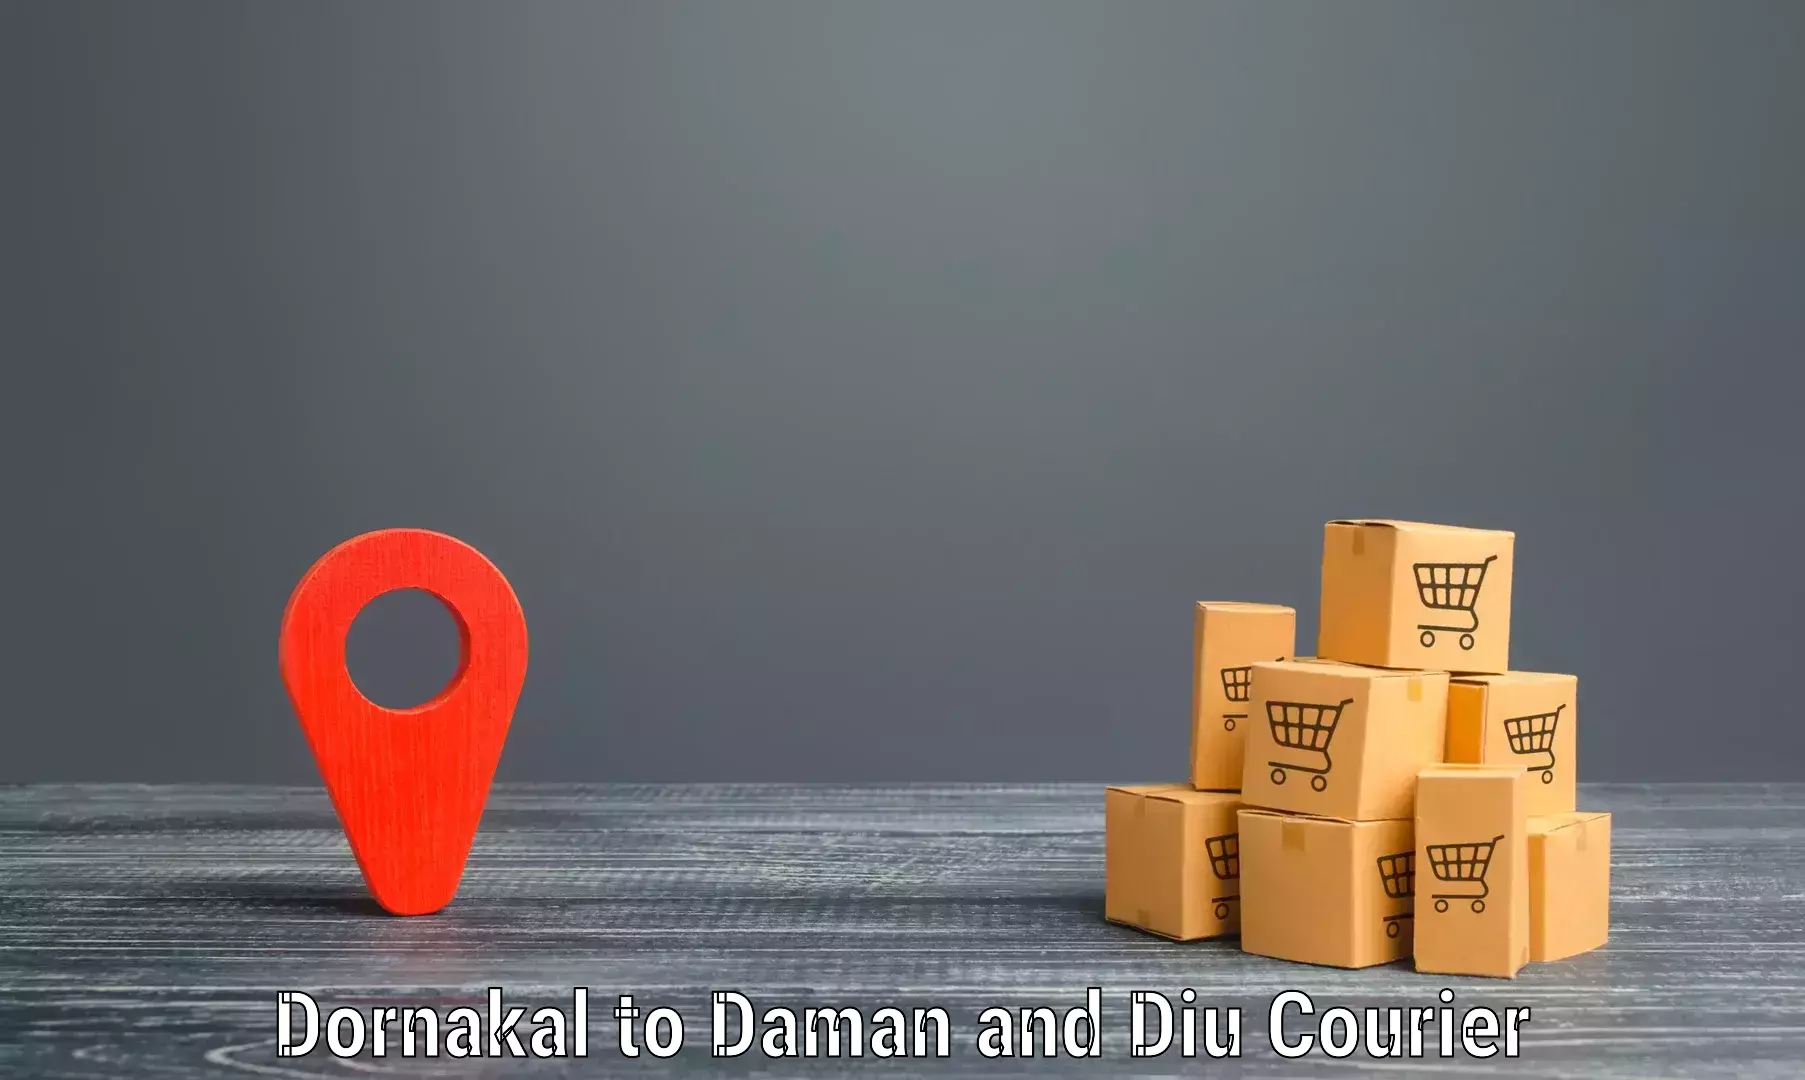 Online package tracking Dornakal to Diu